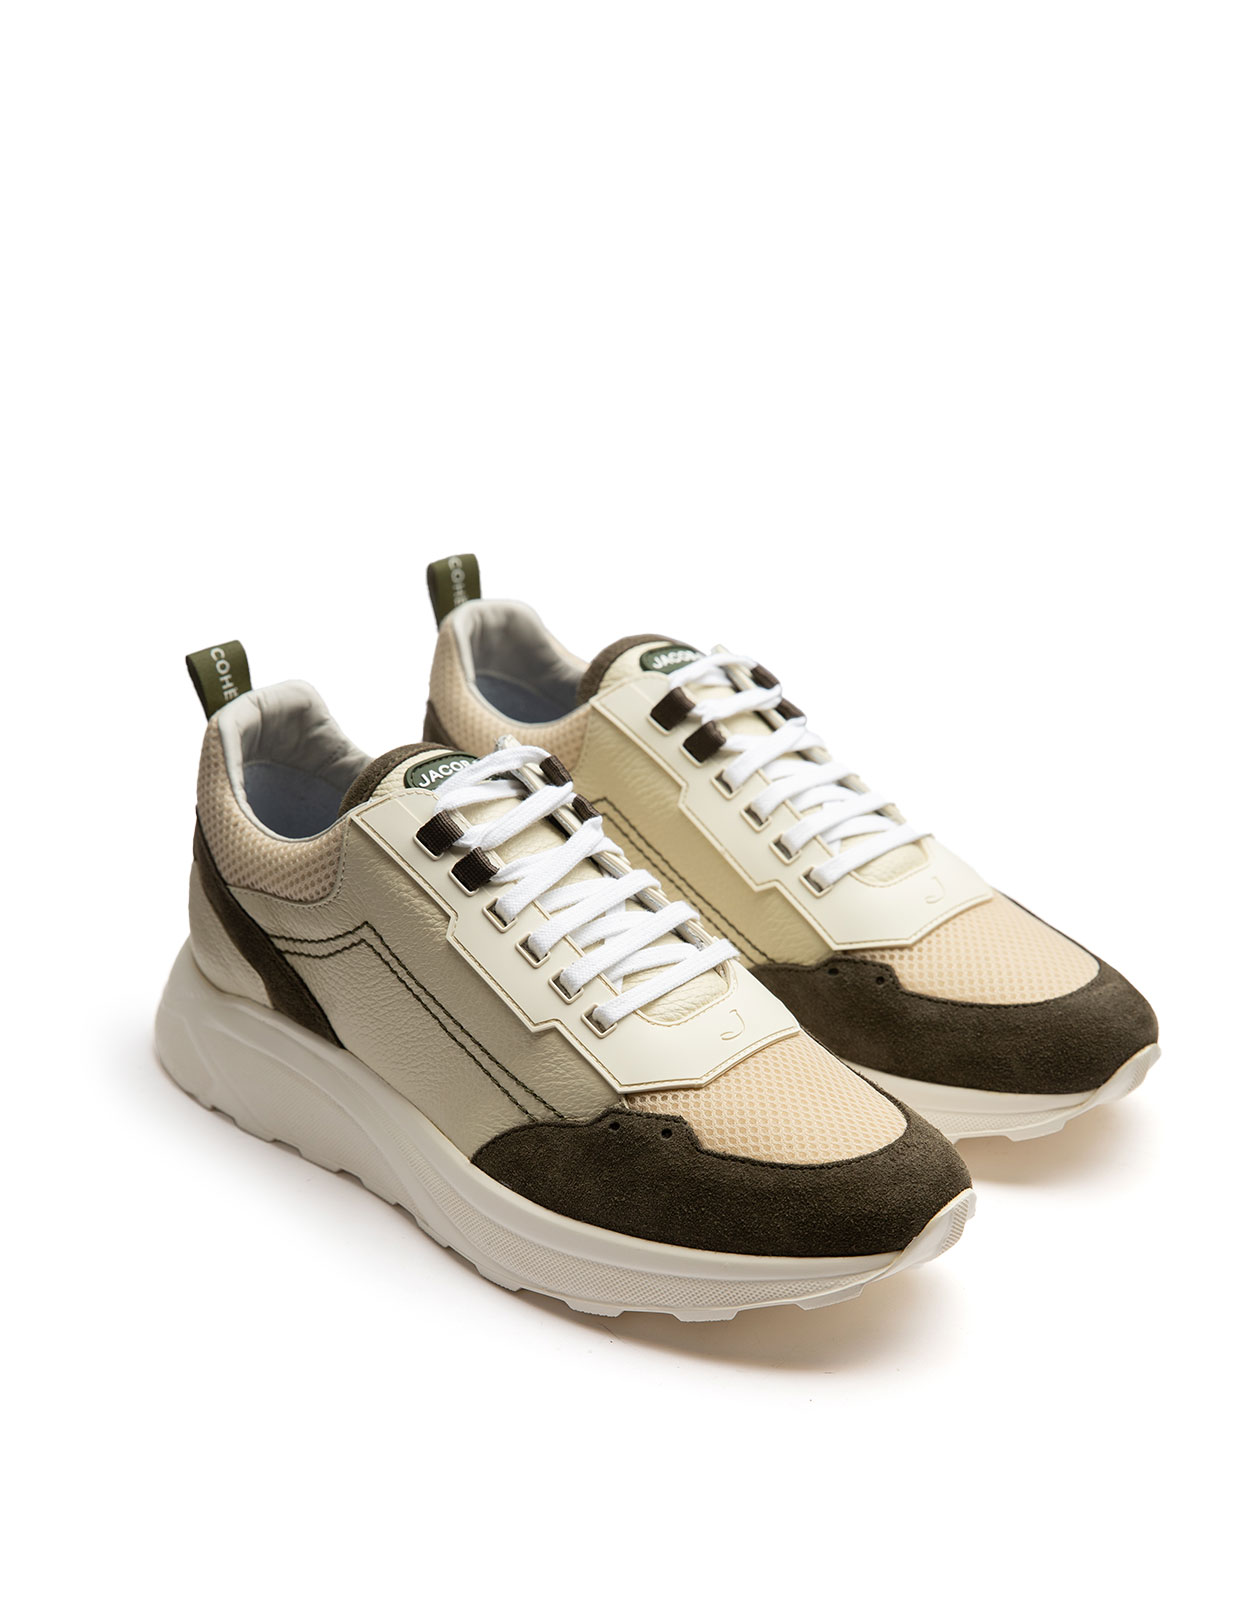 New Spiridon Sneakers Beige/Green